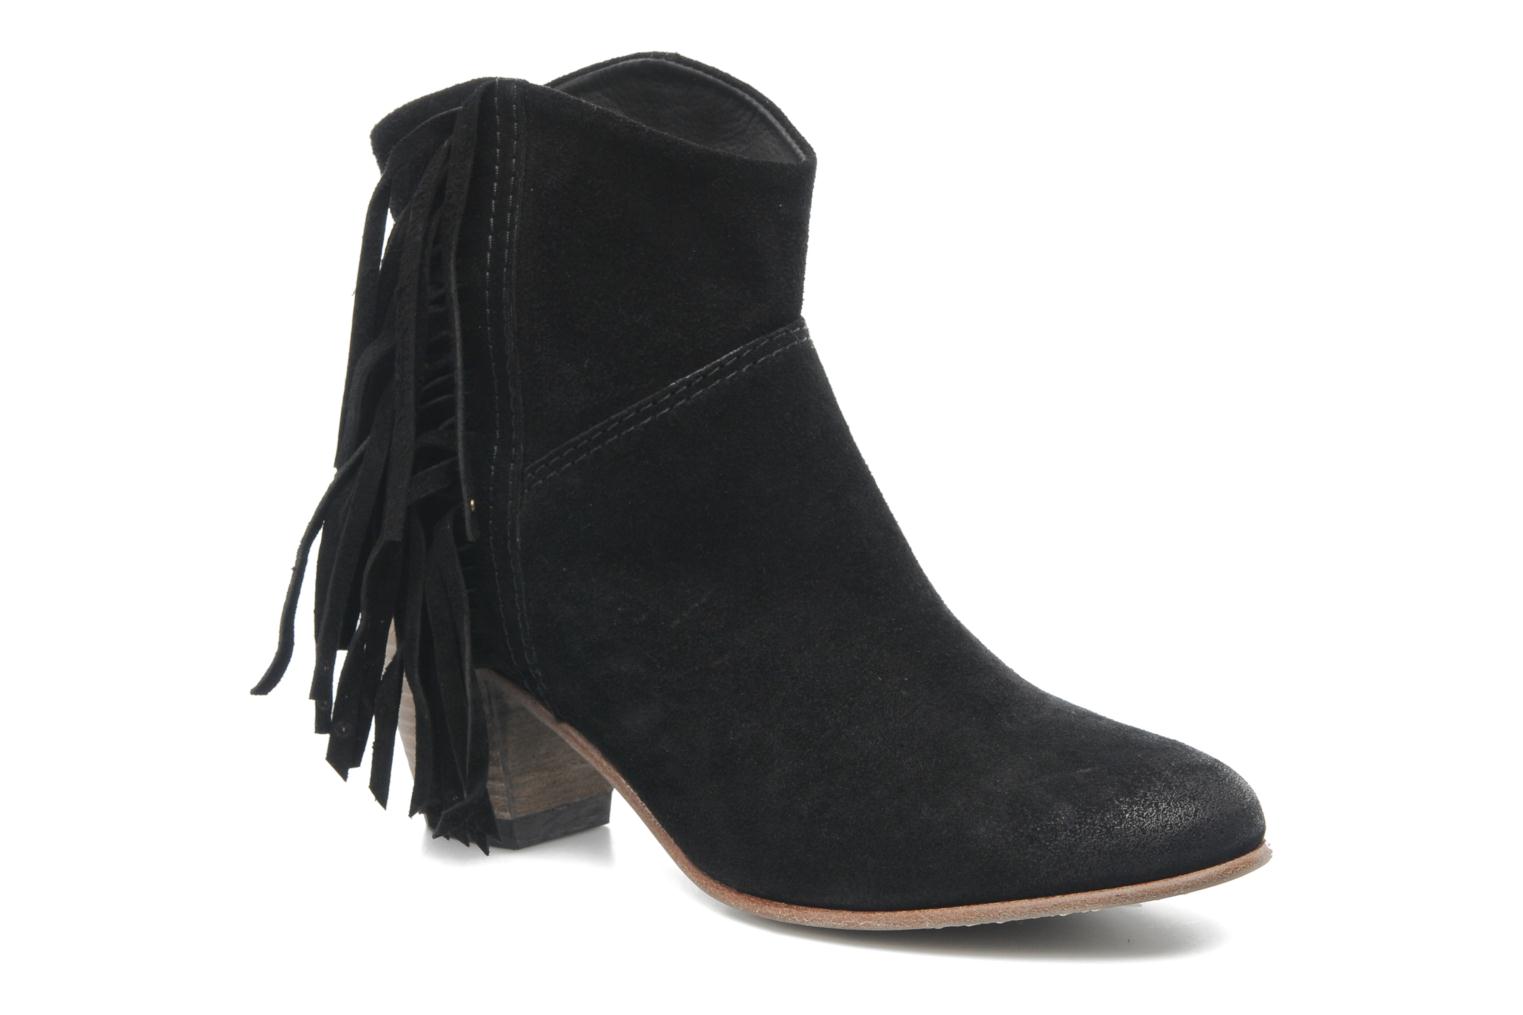 Catarina Martins Capri LE2147 Ankle boots in Black at Sarenza.co.uk ...